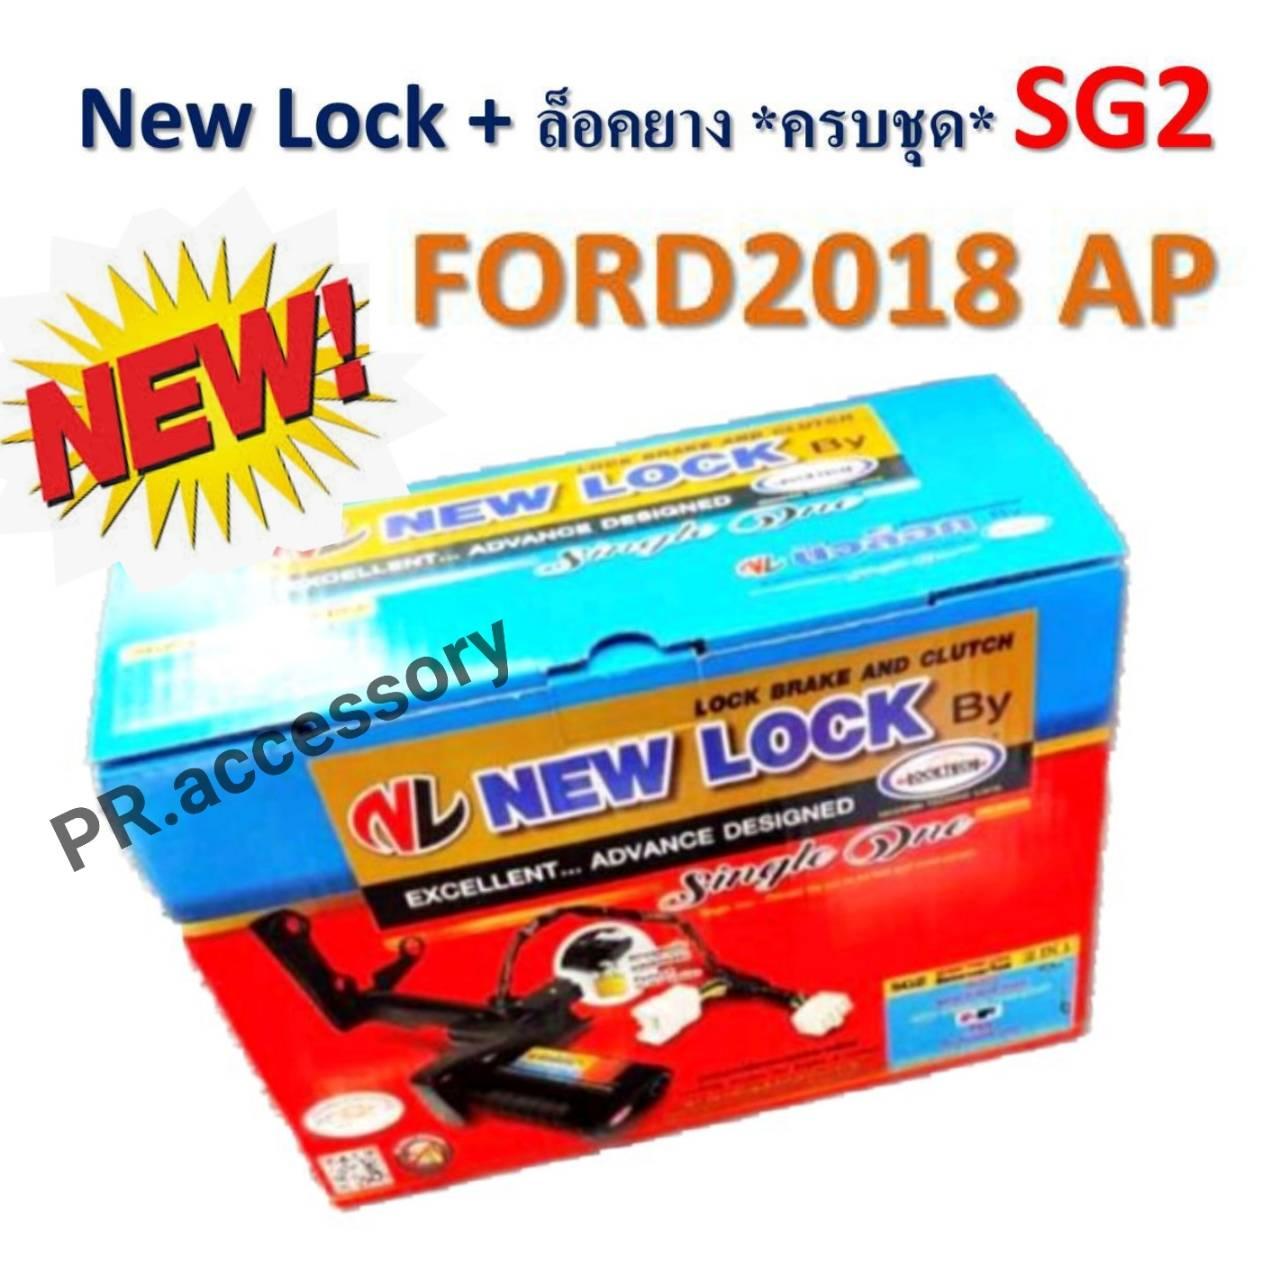 New Lock + ล็อคยางอะไหล่ ระบบกุญแจ ความปลอดภัยสูง SG2 FORD 2018 AP